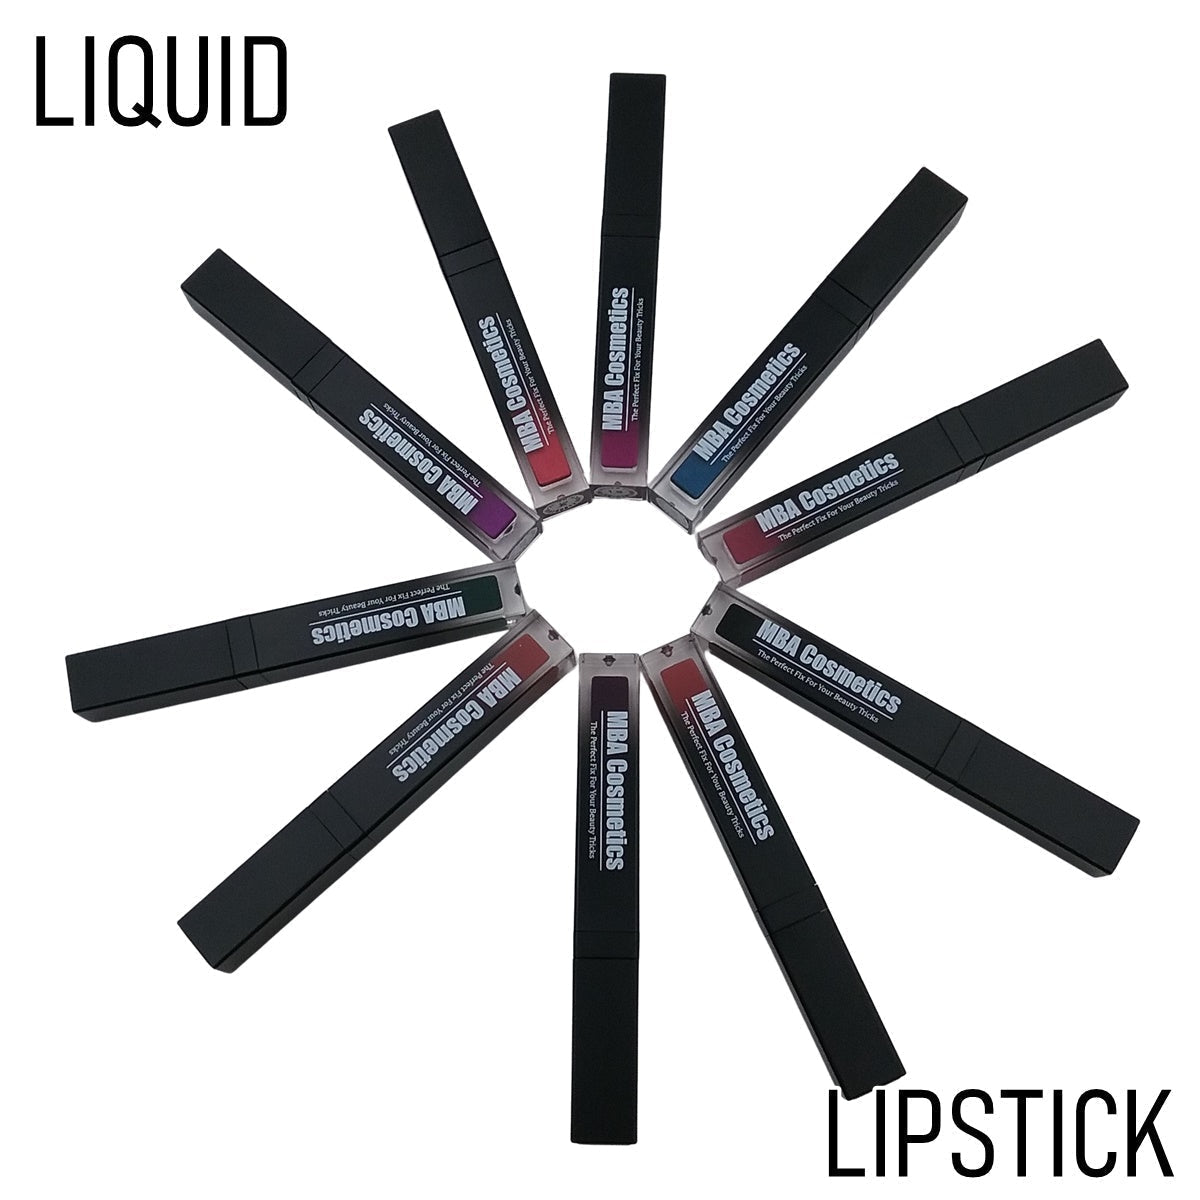 Symphony-Matte Liquid Lipstick